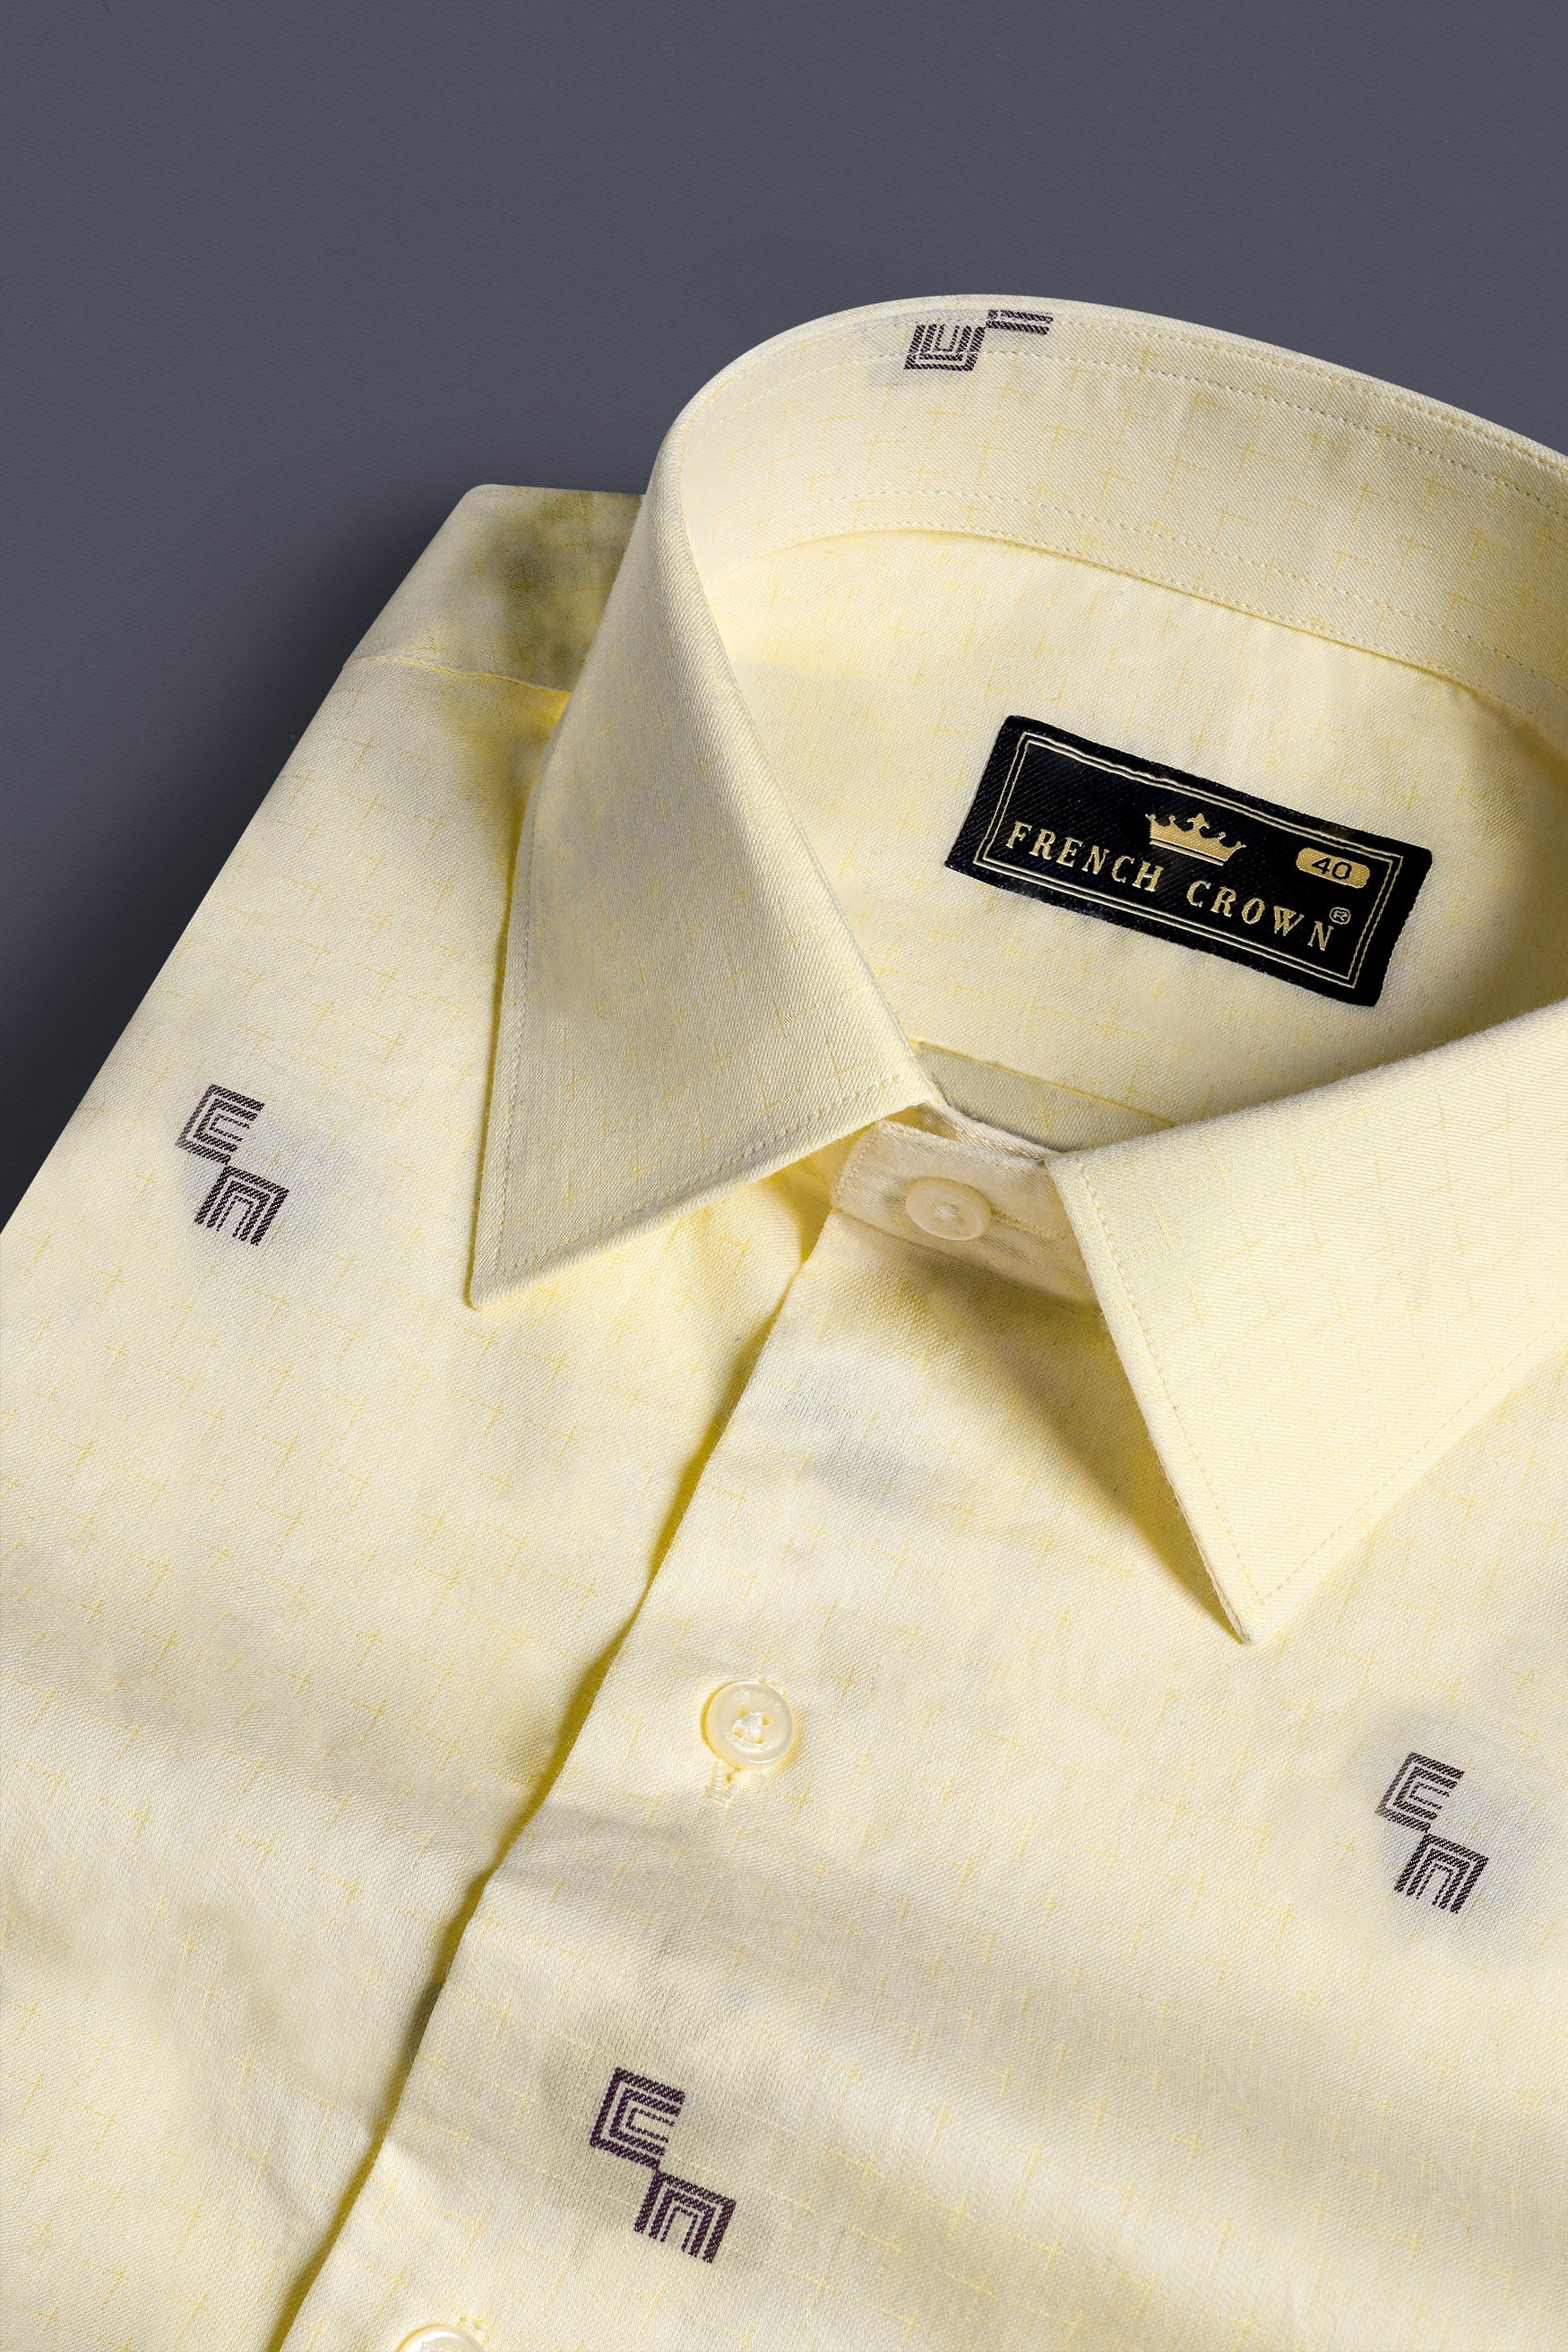 Colonial Yellow and Kabul Brown Jacquard Textured Premium Giza Cotton Shirt